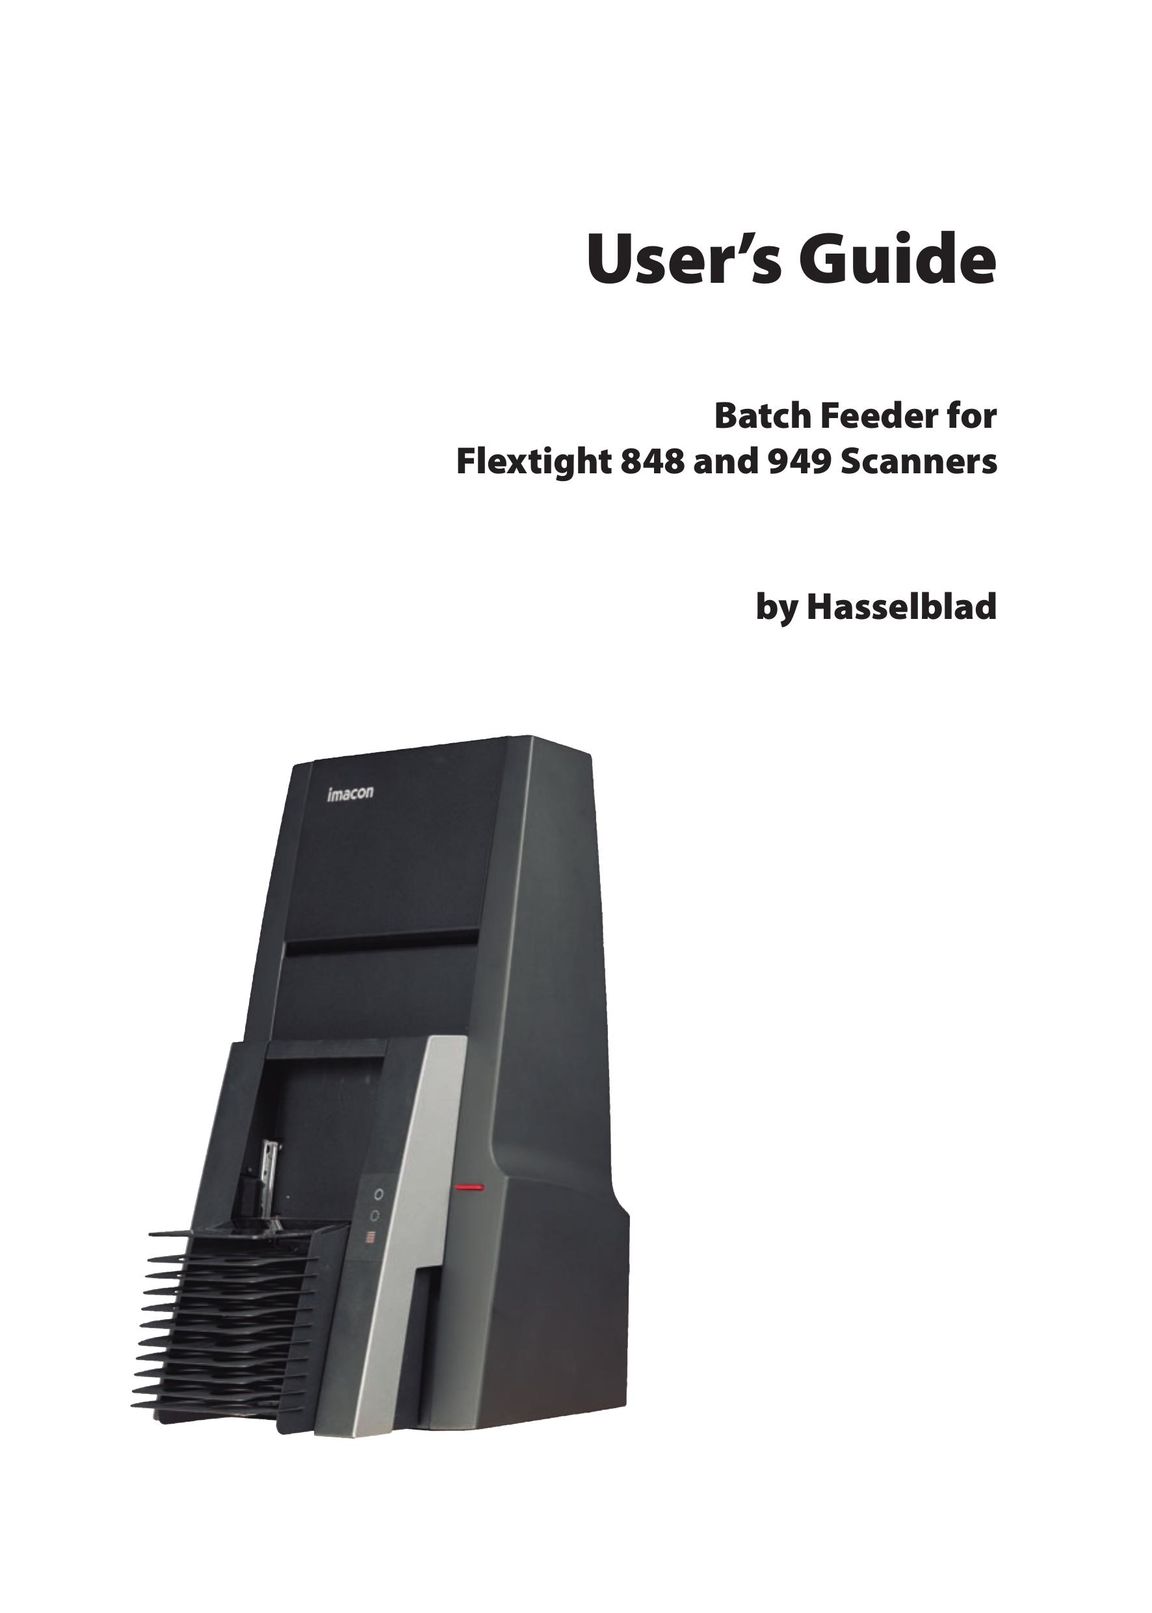 Hasselblad 848 Scanner User Manual